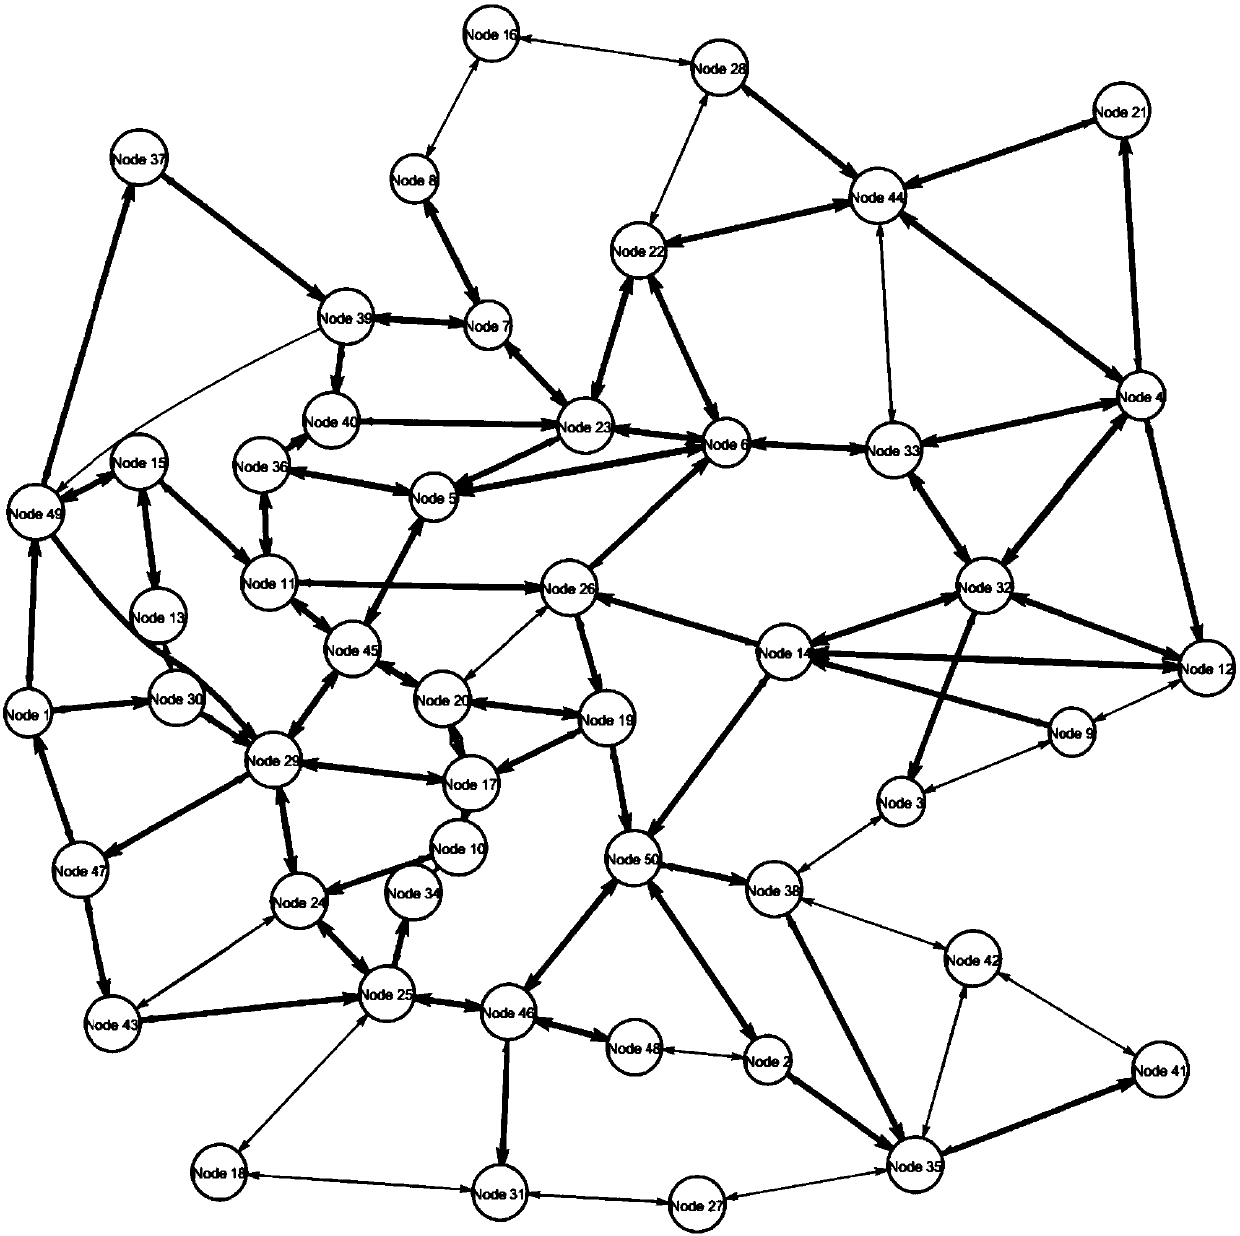 Network detection optimization method based on ant colony algorithm